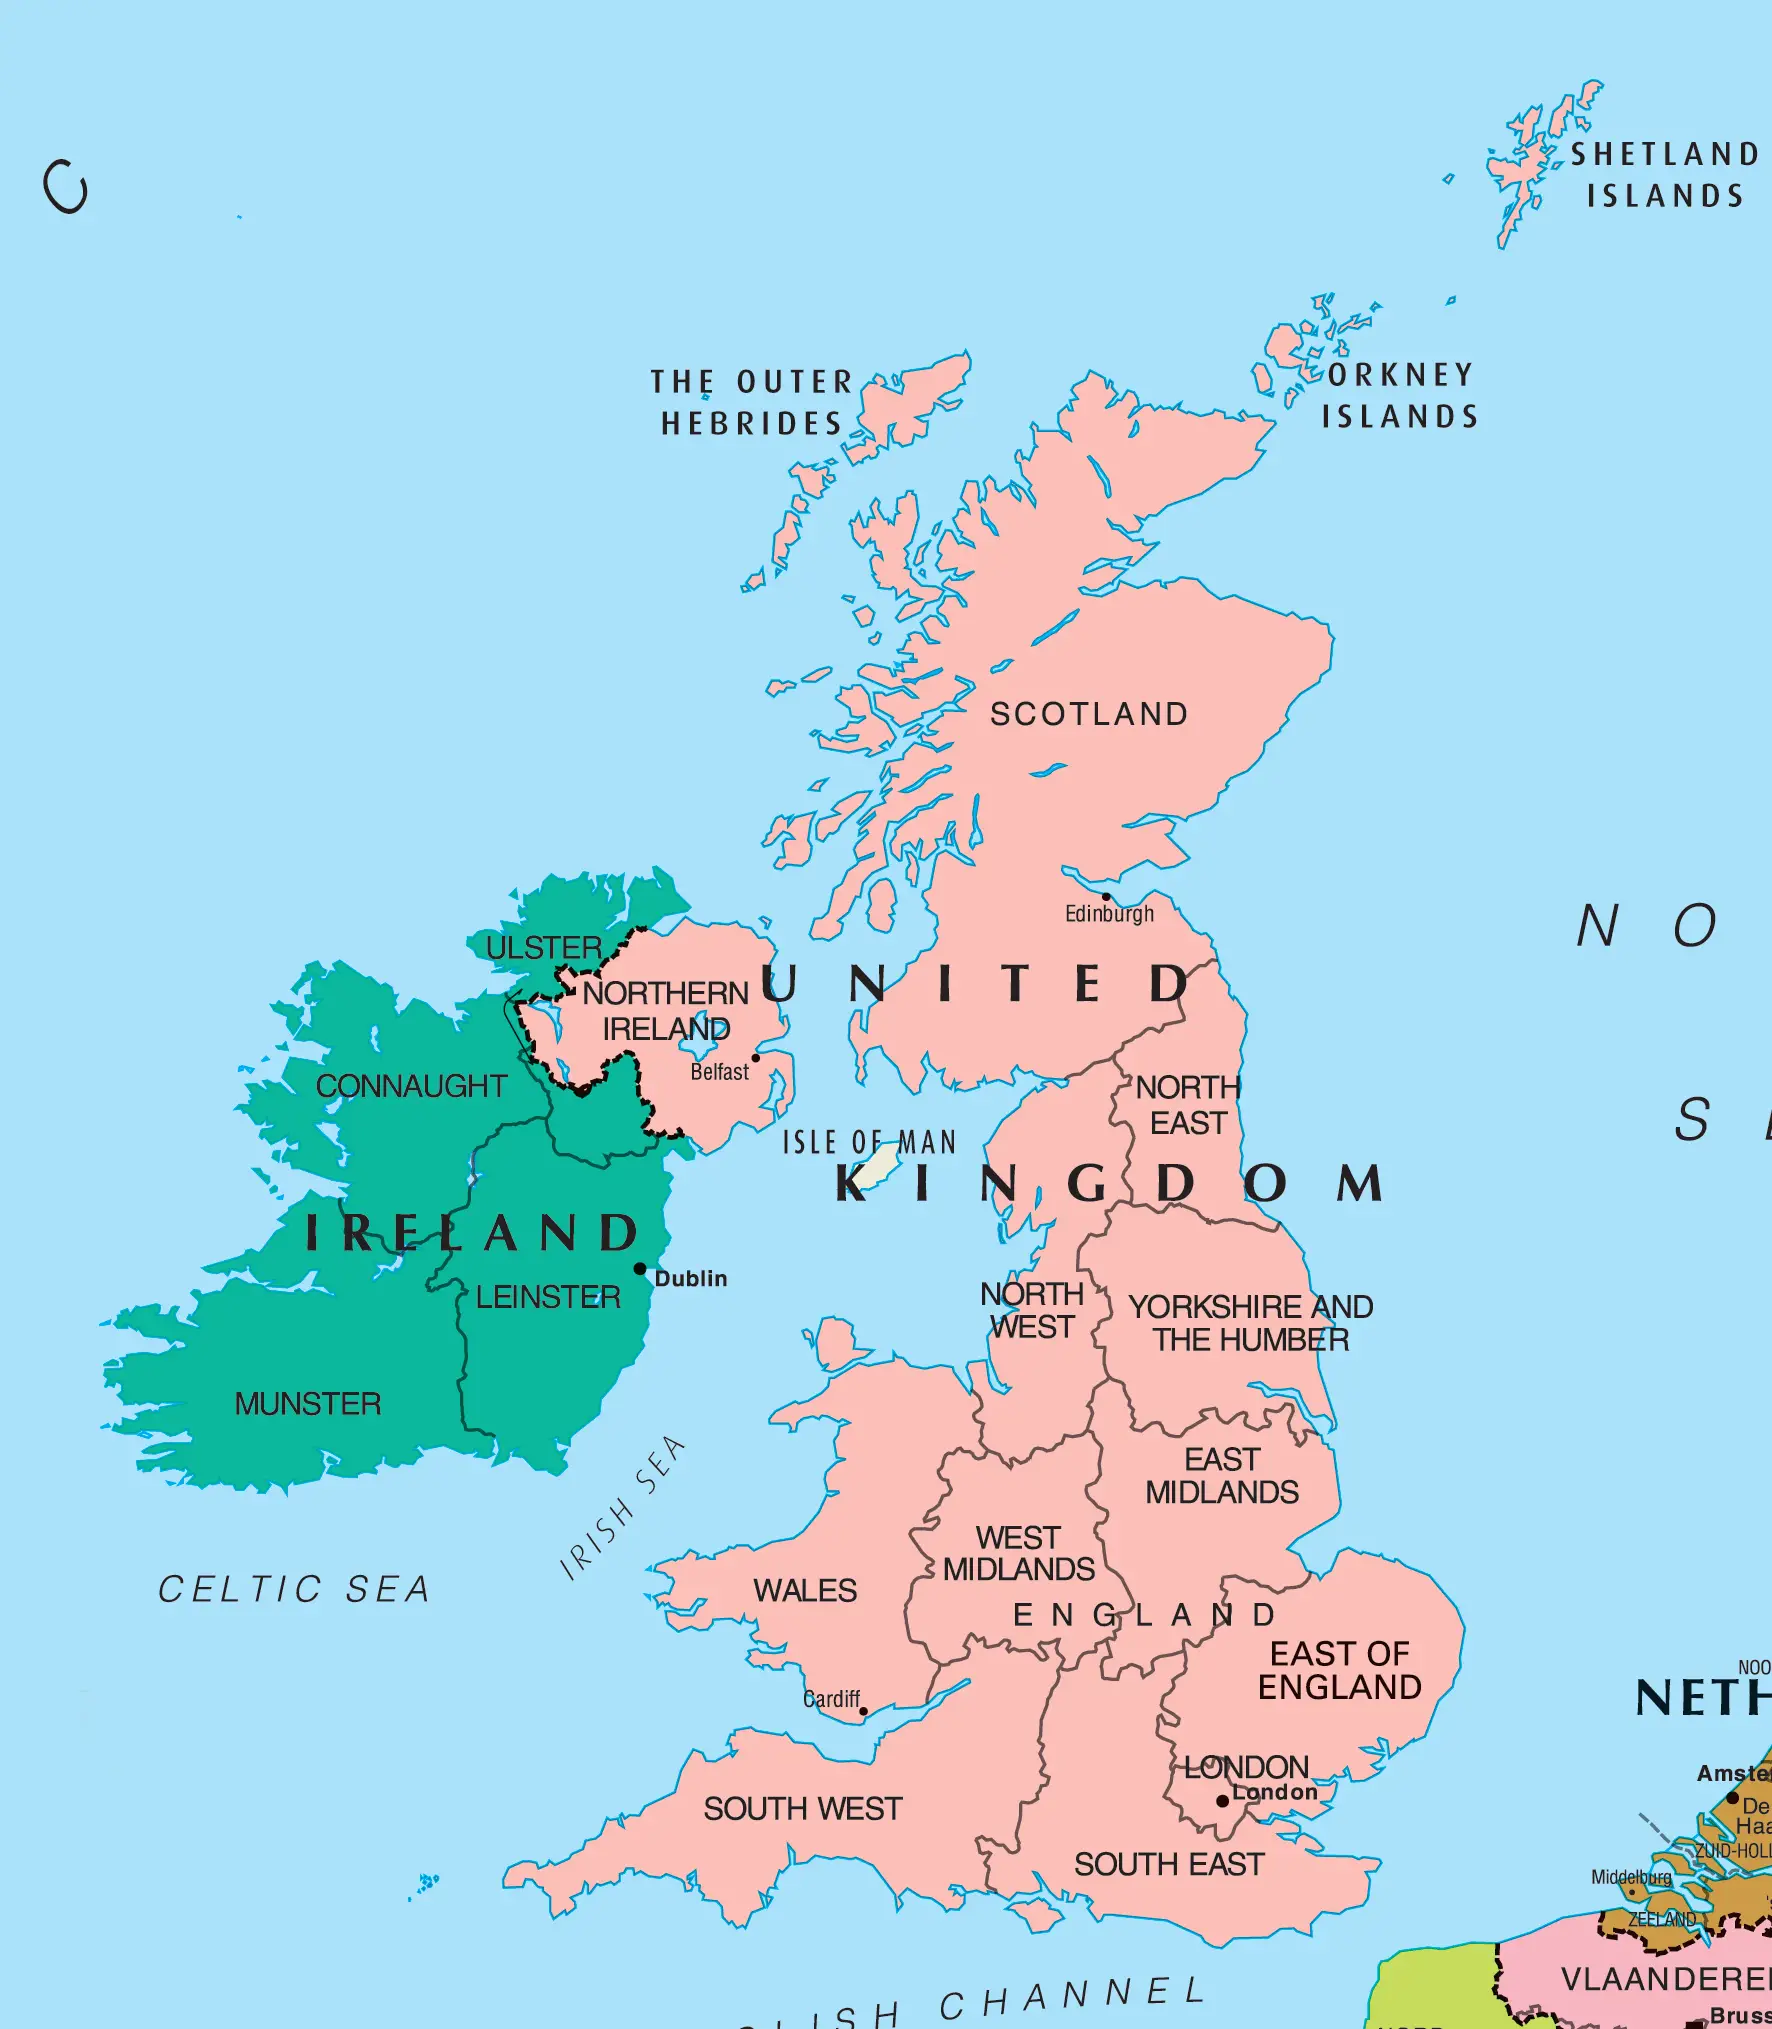 Which part of island of great. The United Kingdom of great Britain карта. Карта the uk of great Britain and Northern Ireland. Карта Британии географическая на английском. Англия и Ирландия на карте.